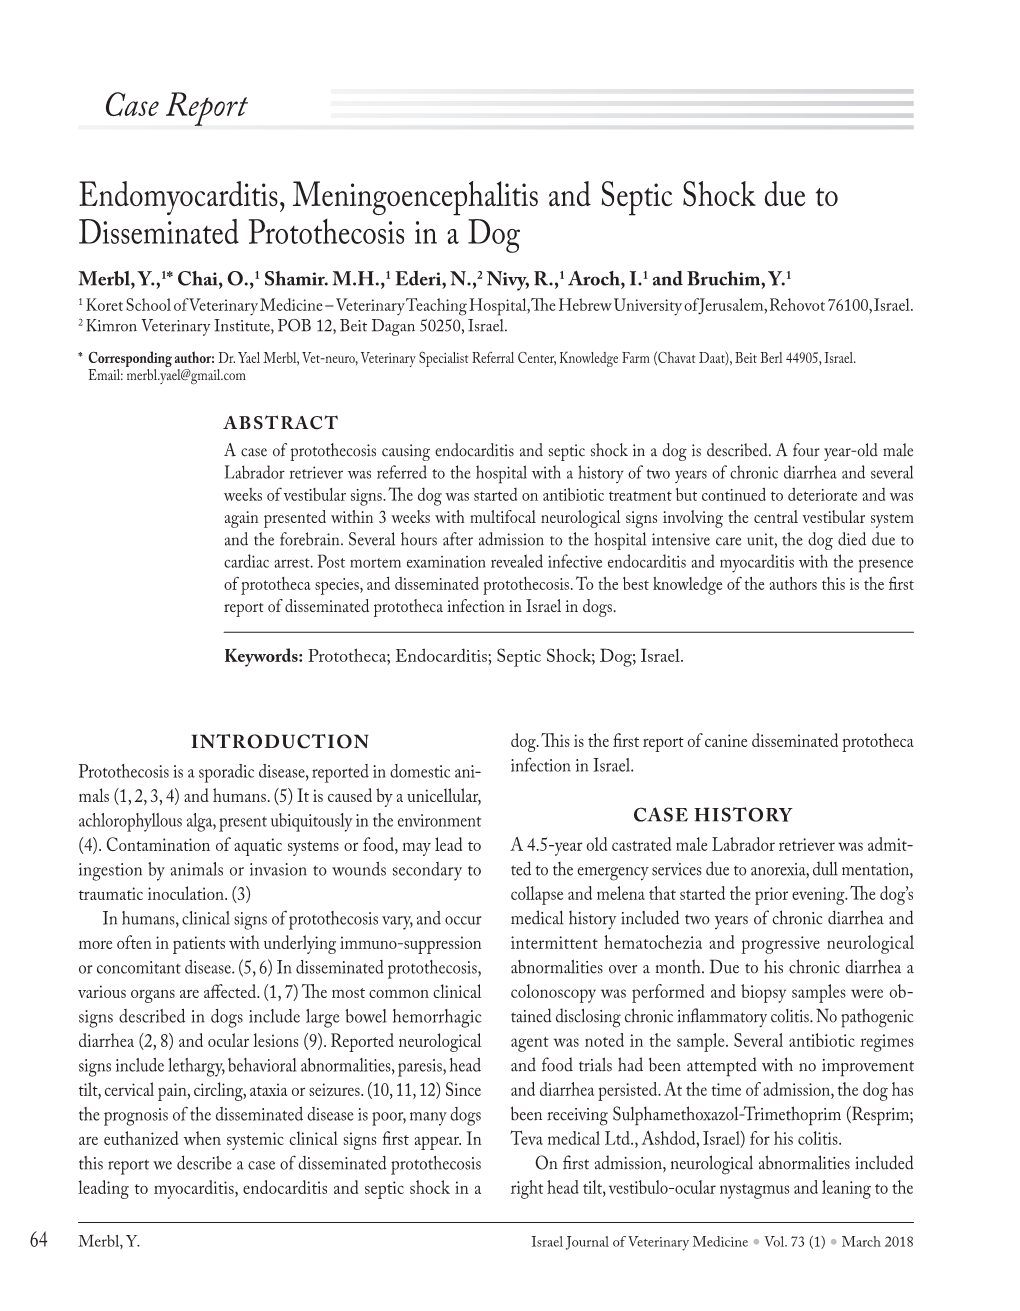 Endomyocarditis, Meningoencephalitis and Septic Shock Due to Disseminated Protothecosis in a Dog Merbl, Y.,1* Chai, O.,1 Shamir